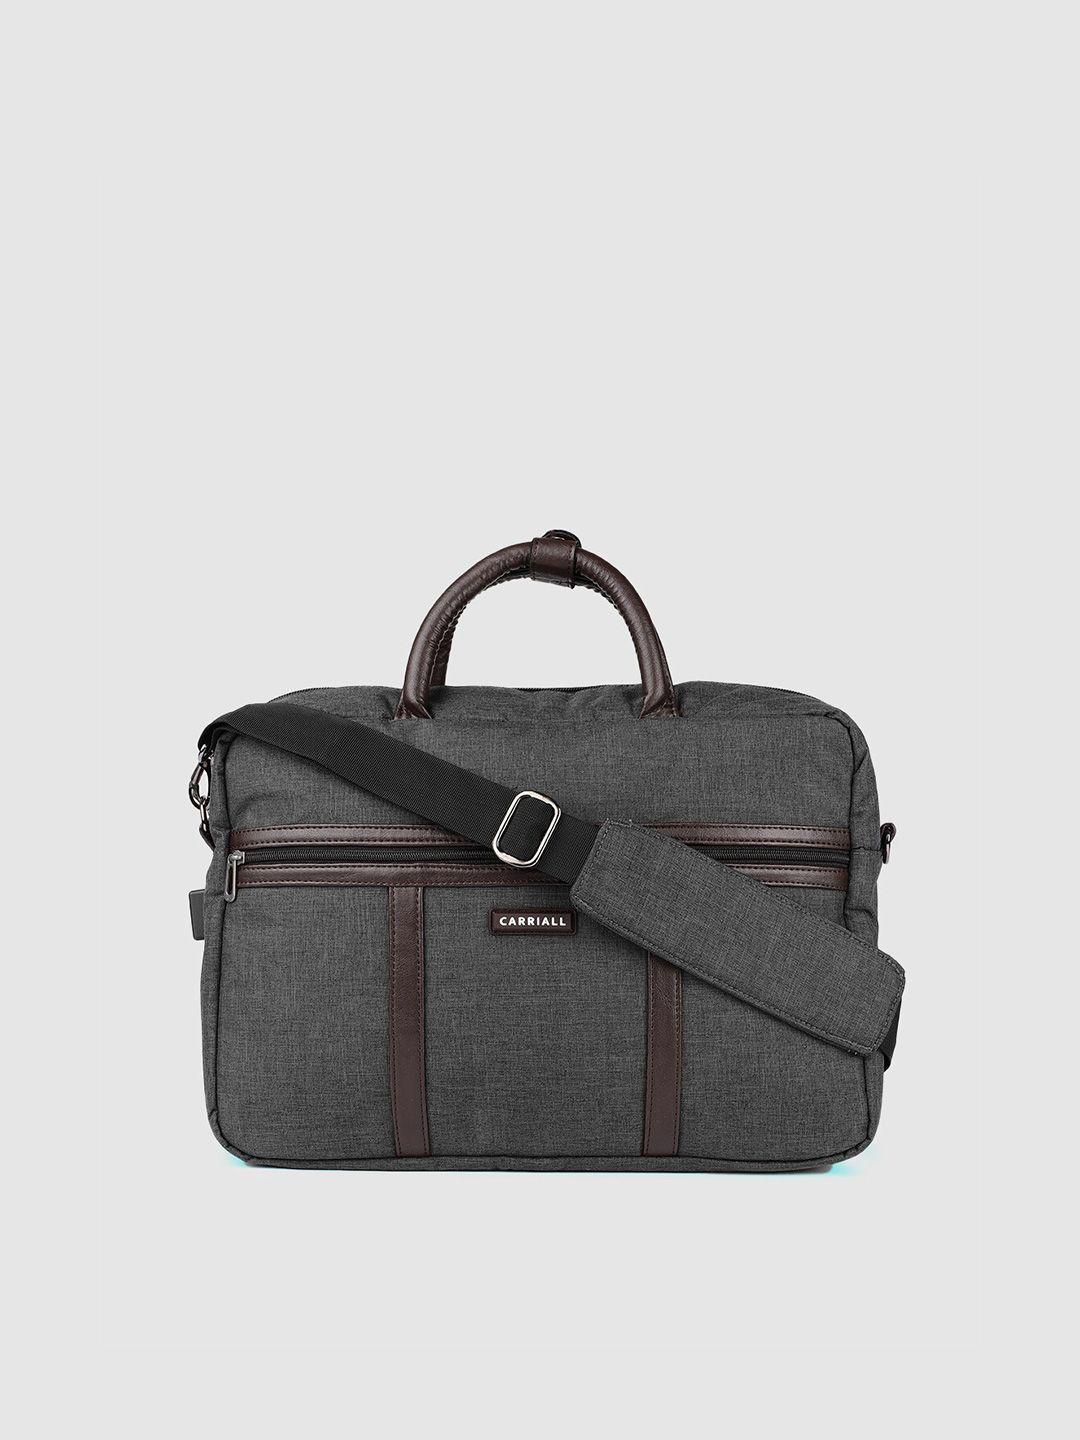 carriall unisex grey messenger bag